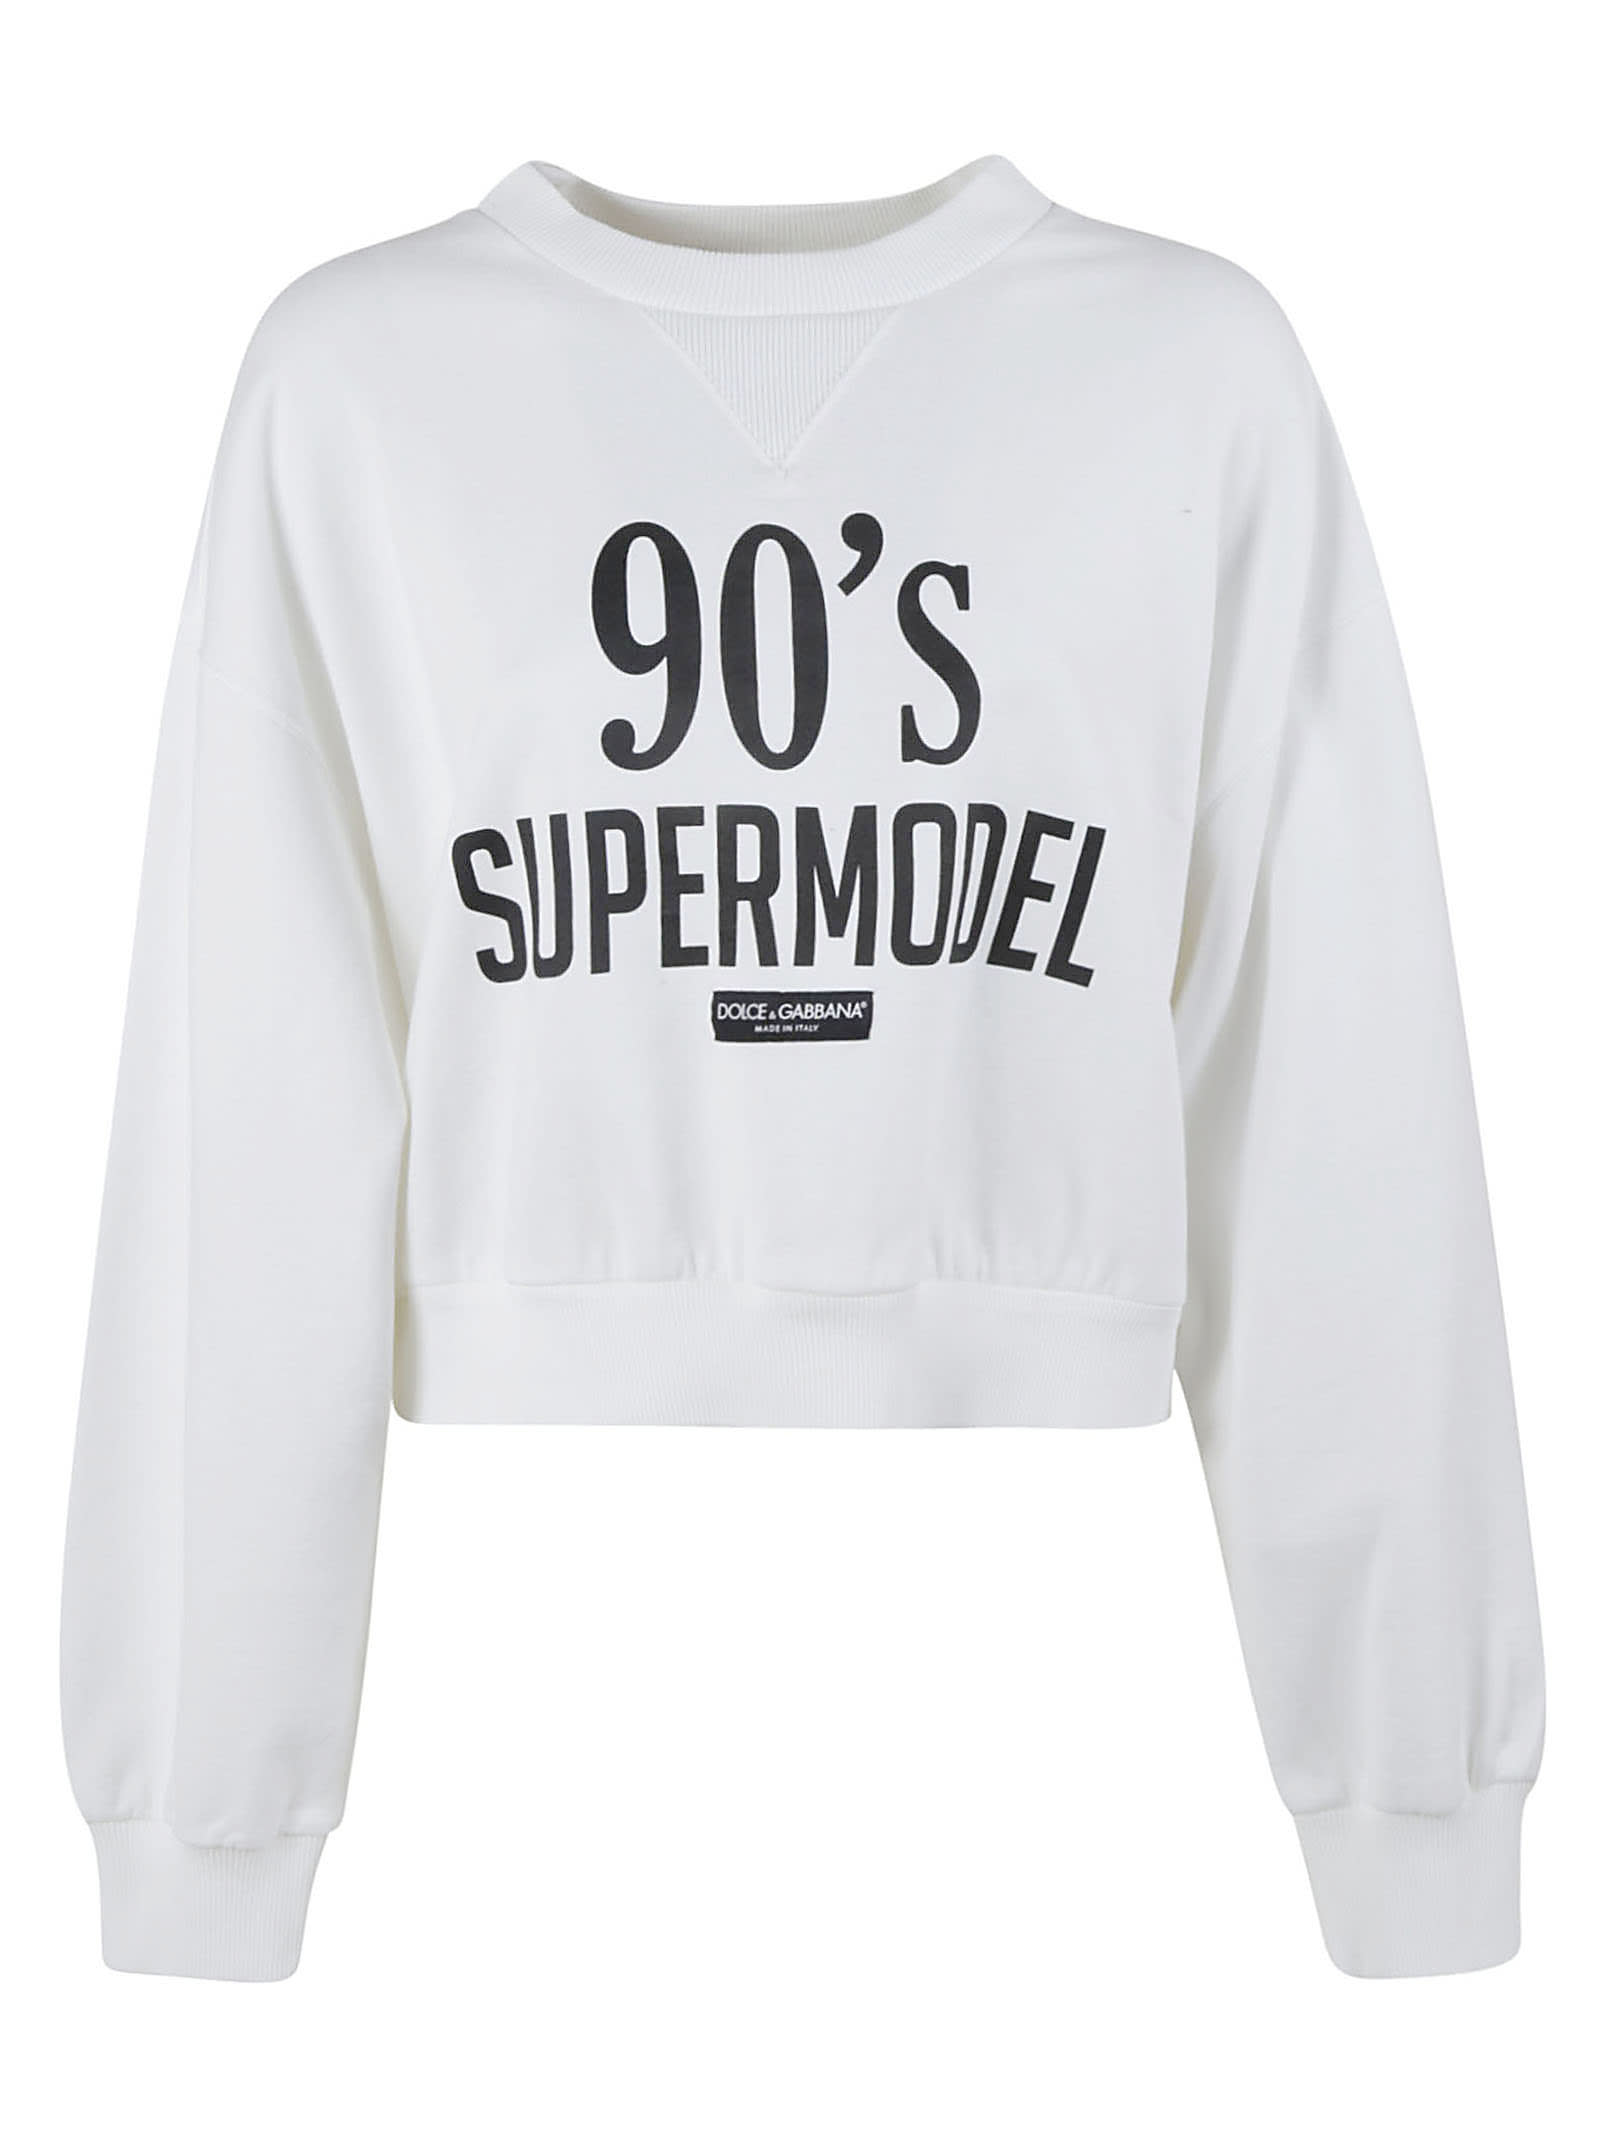 Dolce & Gabbana 90s Supermodel Cropped Sweatshirt